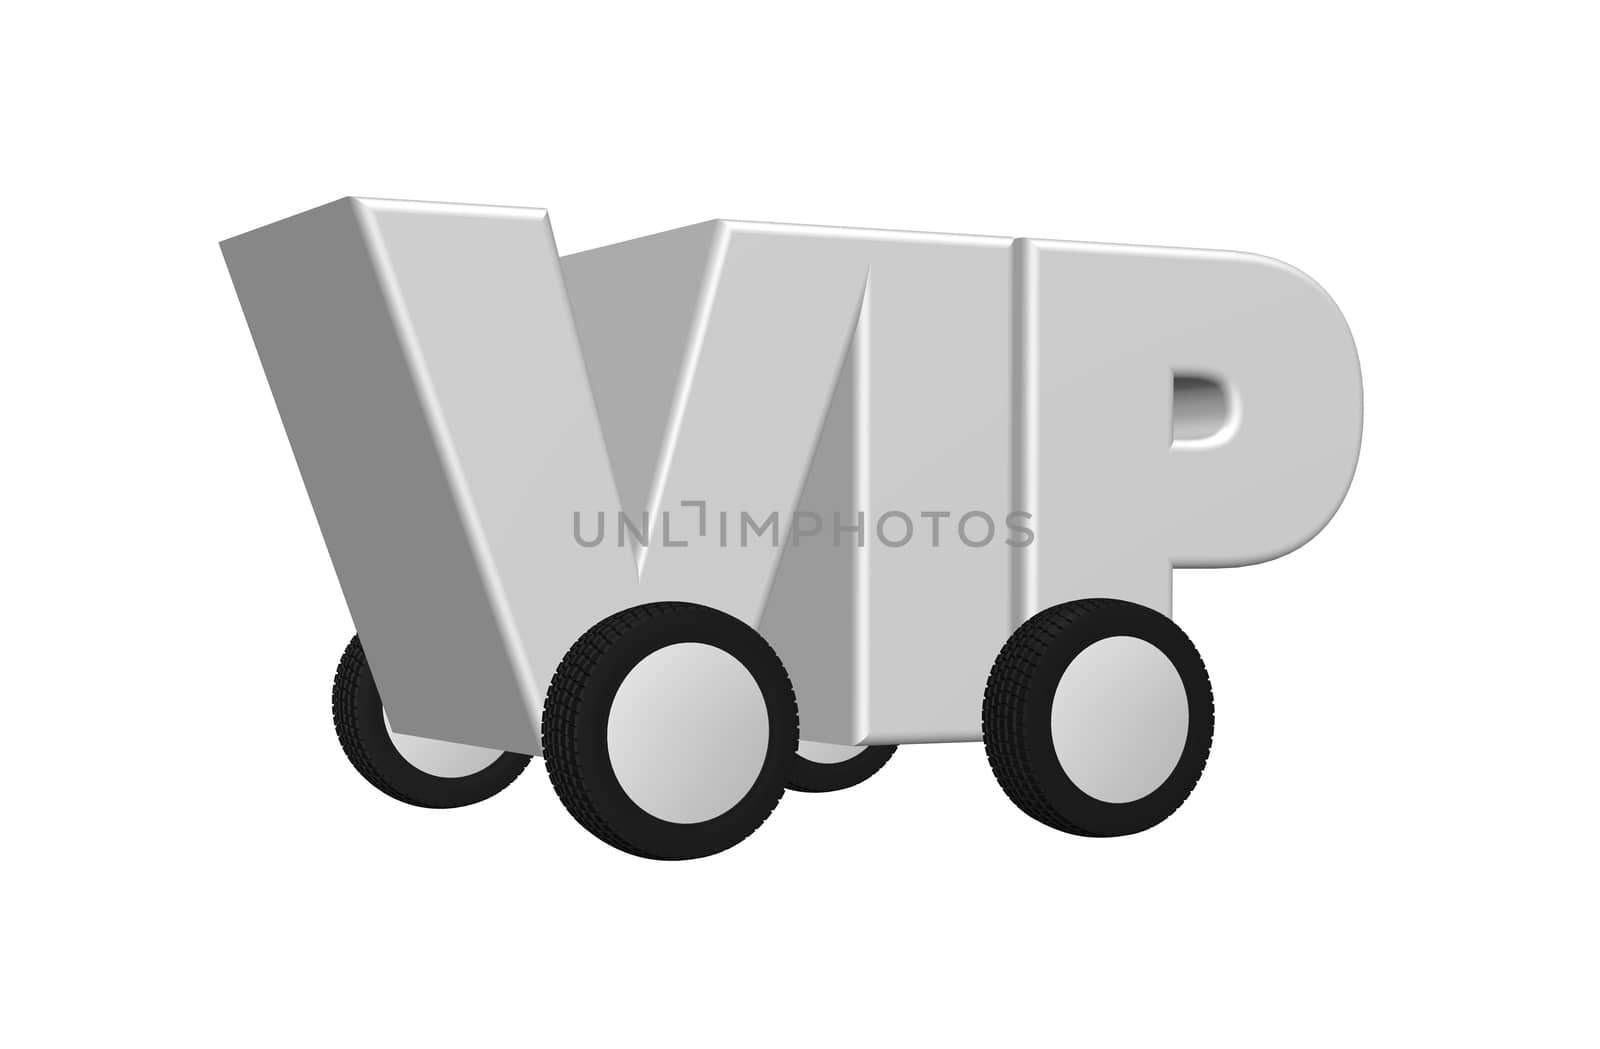 vip on wheels - 3d illustration